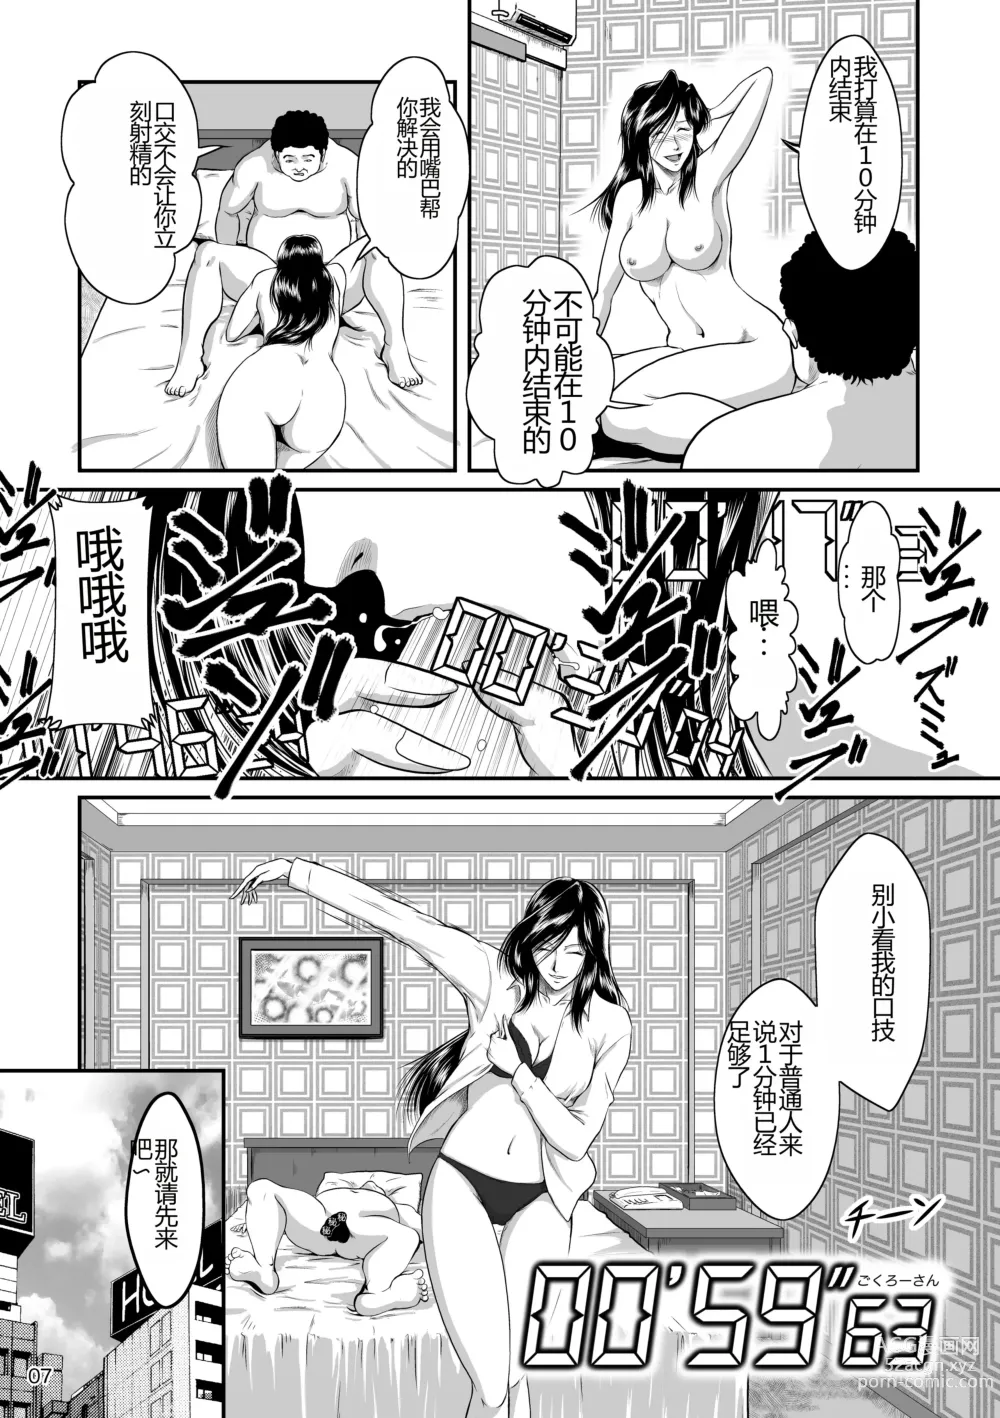 Page 9 of doujinshi Bitch & Slave